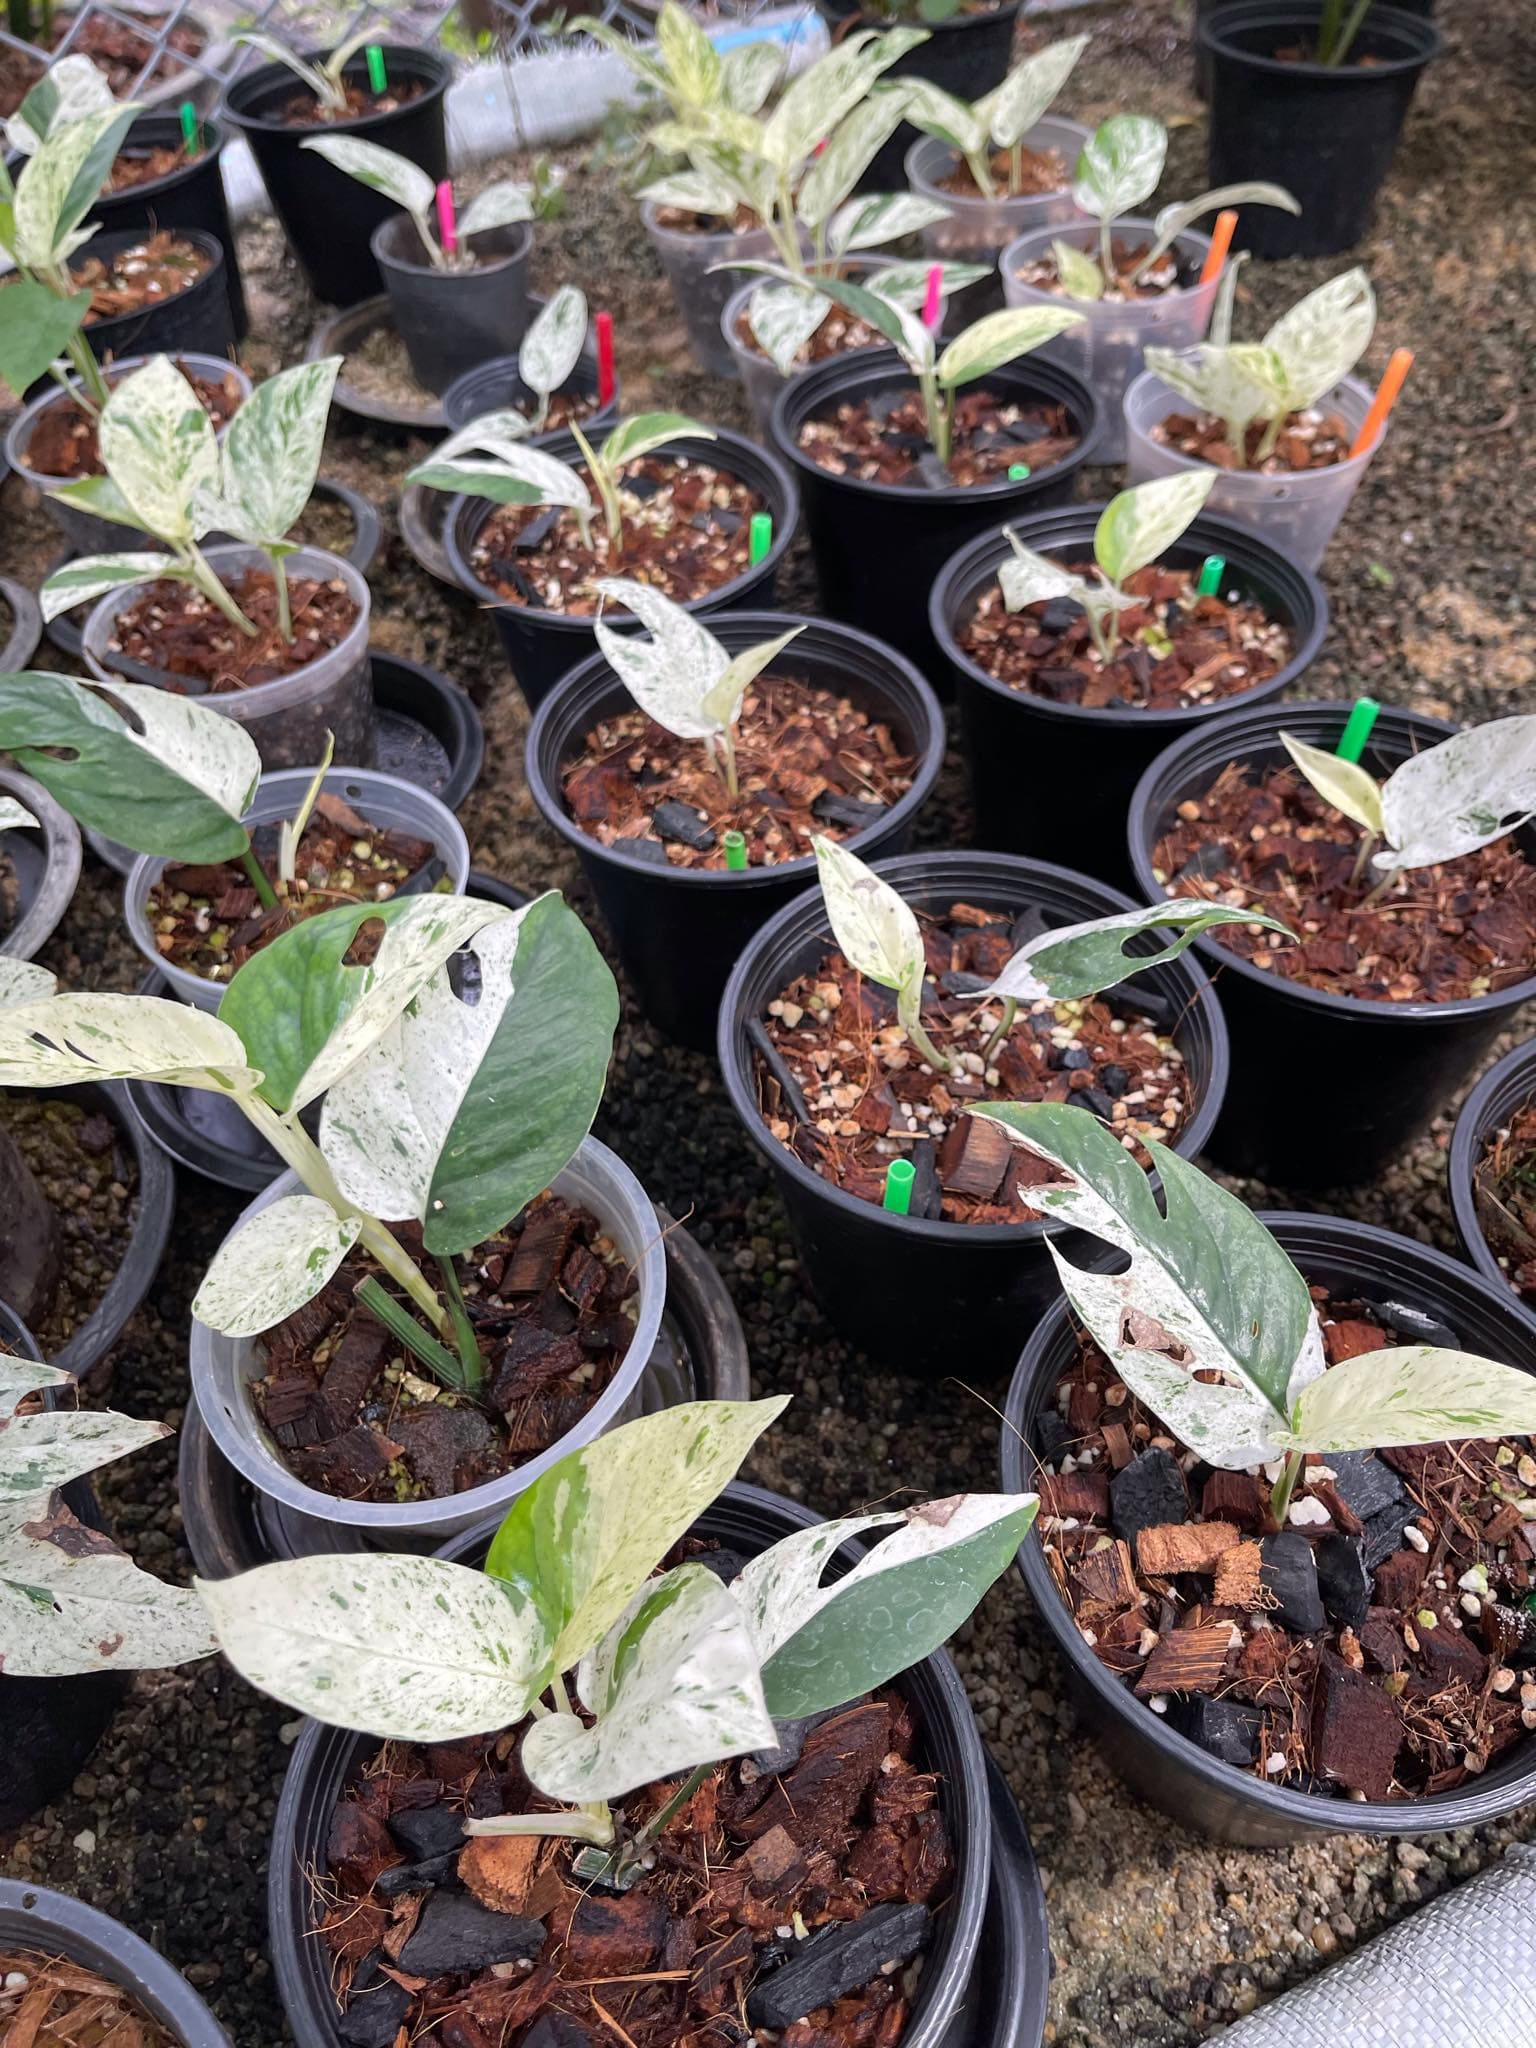 HUGE Epipremnum Pinnatum Mint Variegata (Actual Plant First Pics